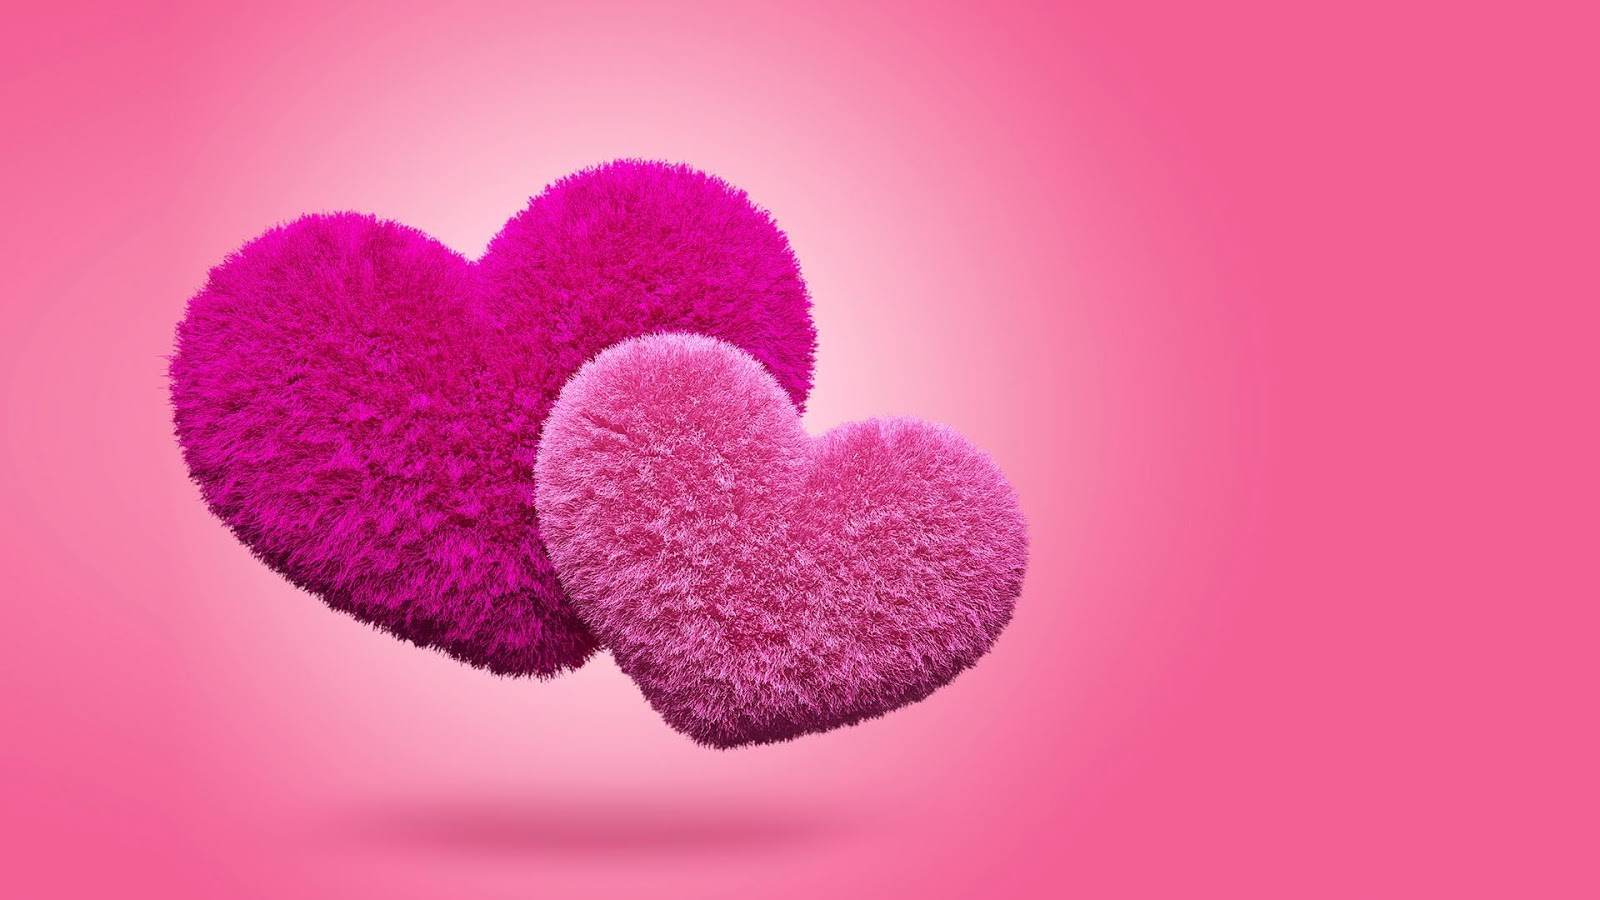 beautiful hearts pink image